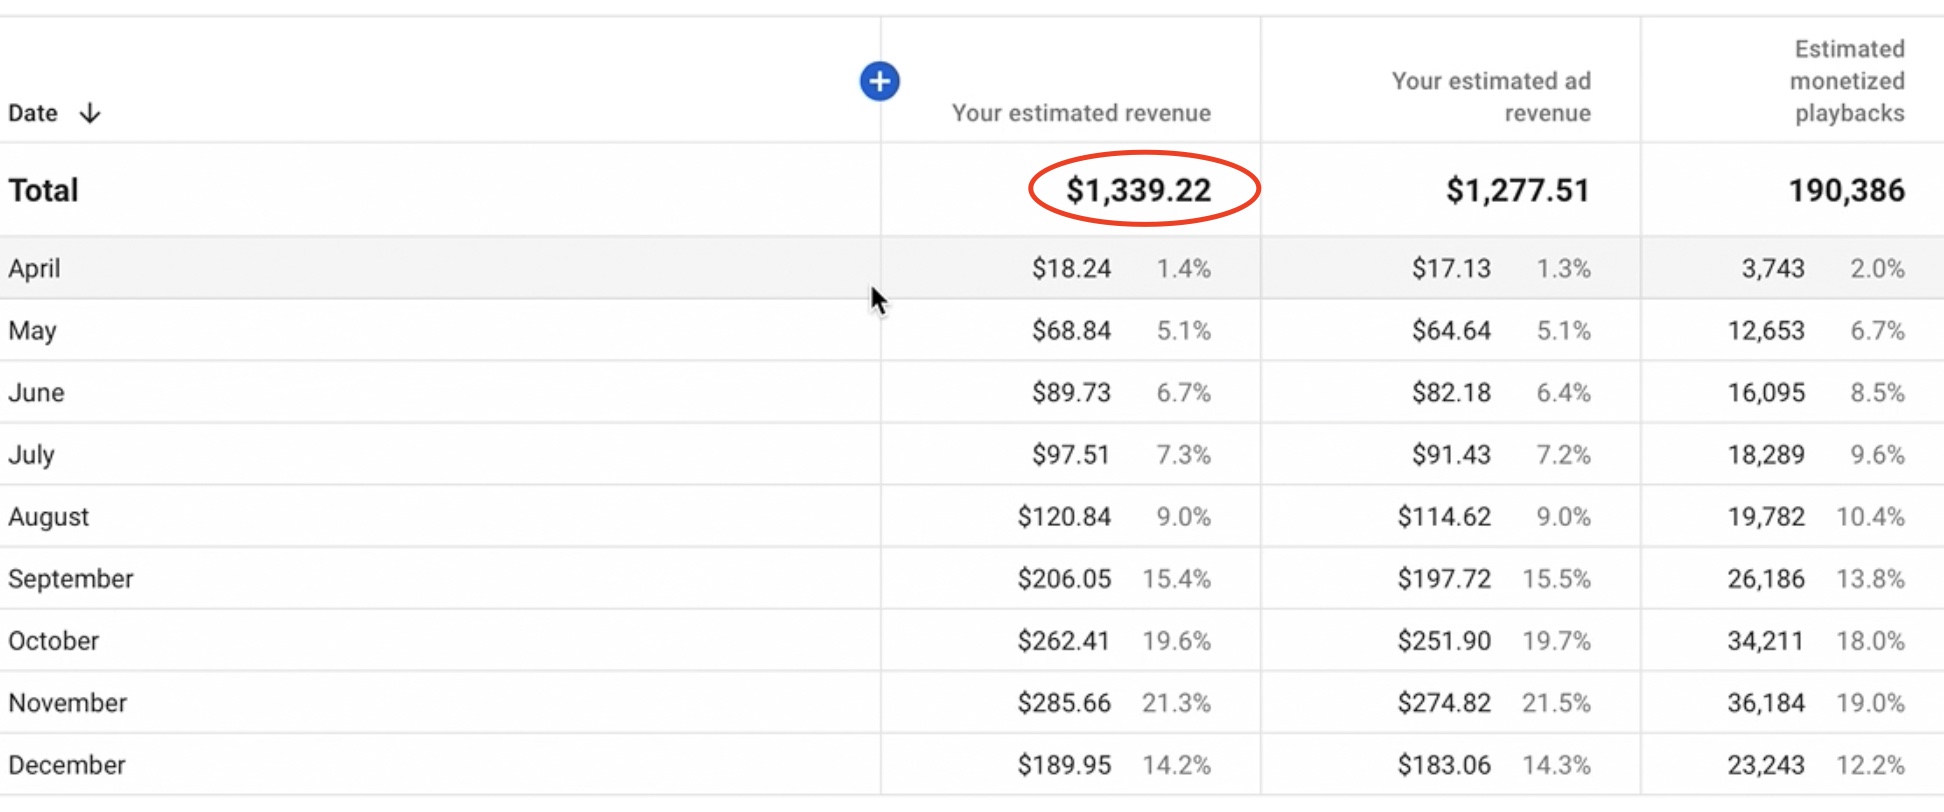 HOW MUCH MONEY YouTube PAYS ME: YouTube Monetization explained 1